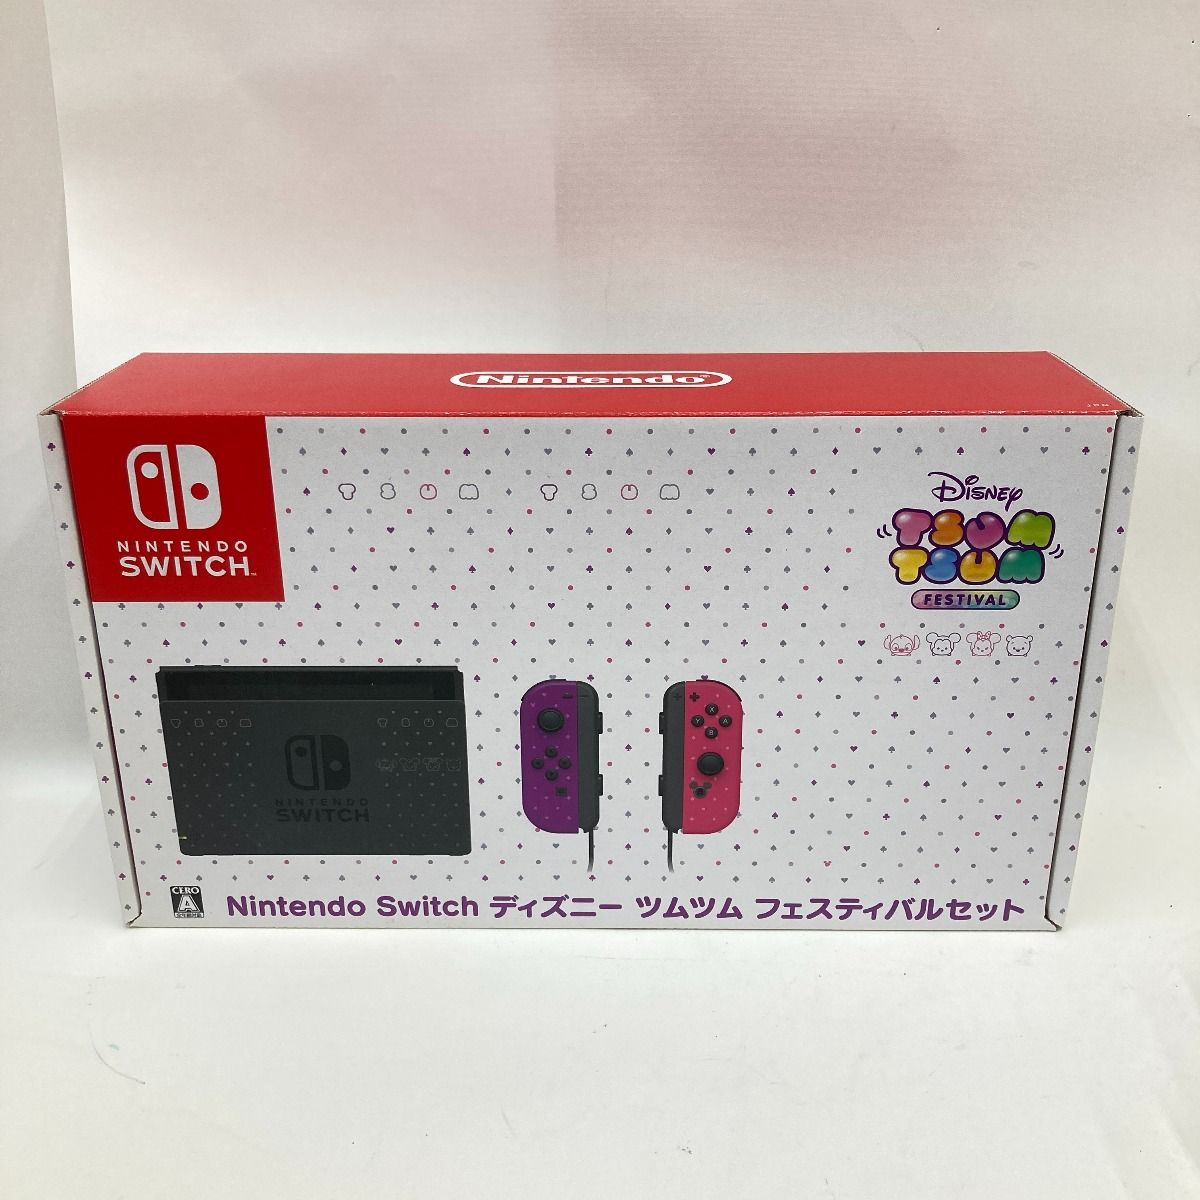 〇〇Nintendo ニンテンドウ Nintendo Switch ディズニー ツムツム フェスティバルセット HAC-001(-01)  HADSKCAEB ソフト欠品 - メルカリ